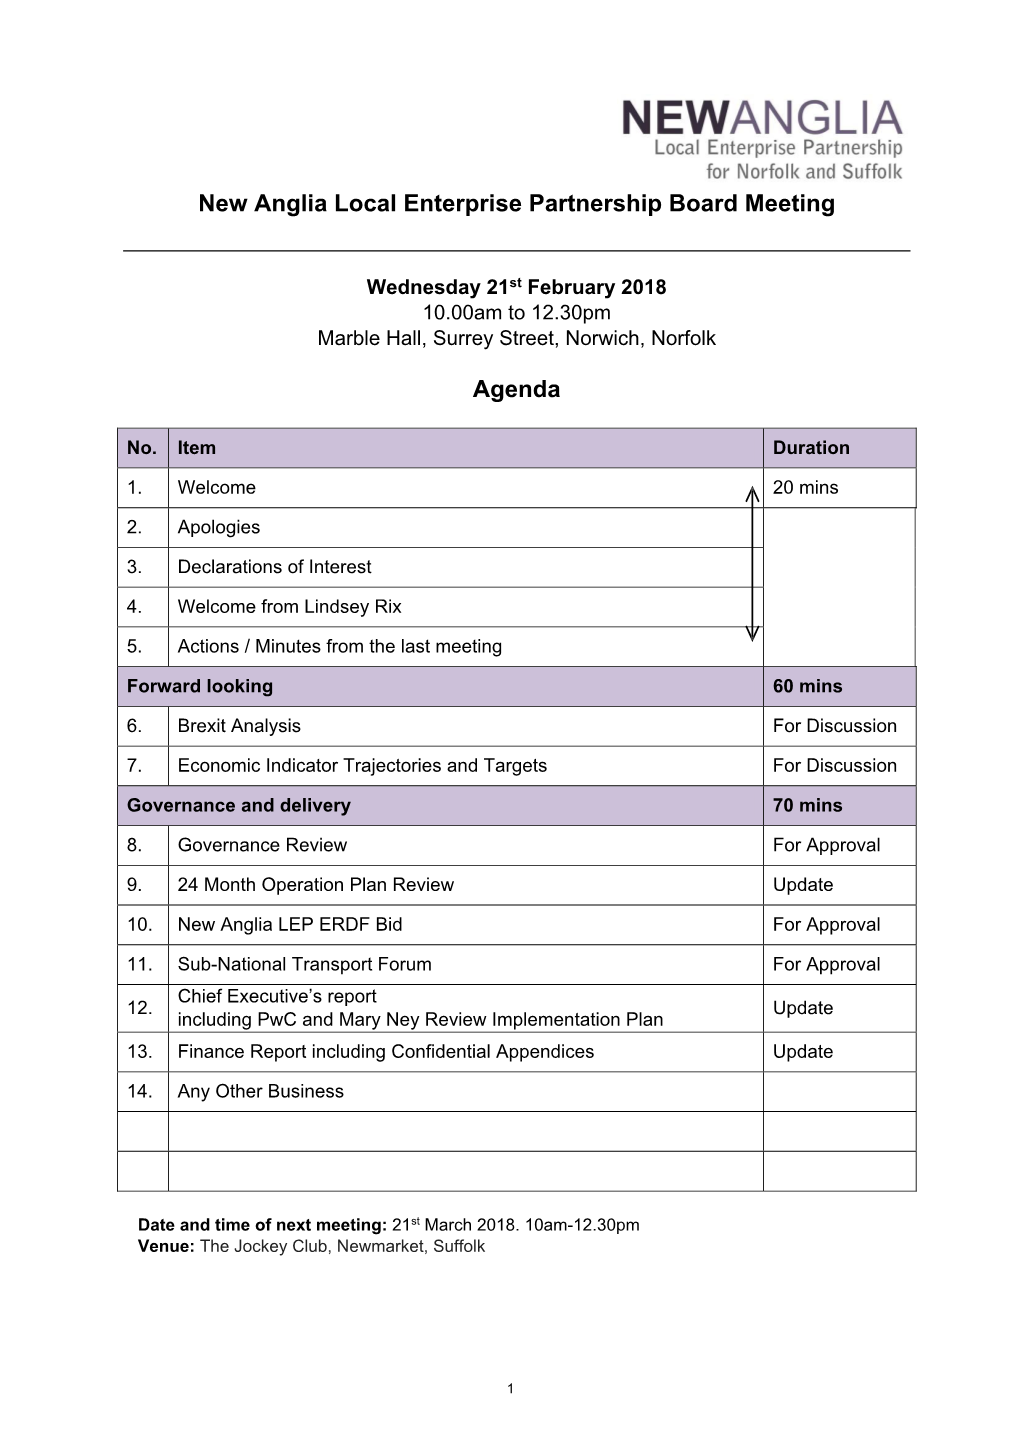 New Anglia Local Enterprise Partnership Board Meeting Agenda